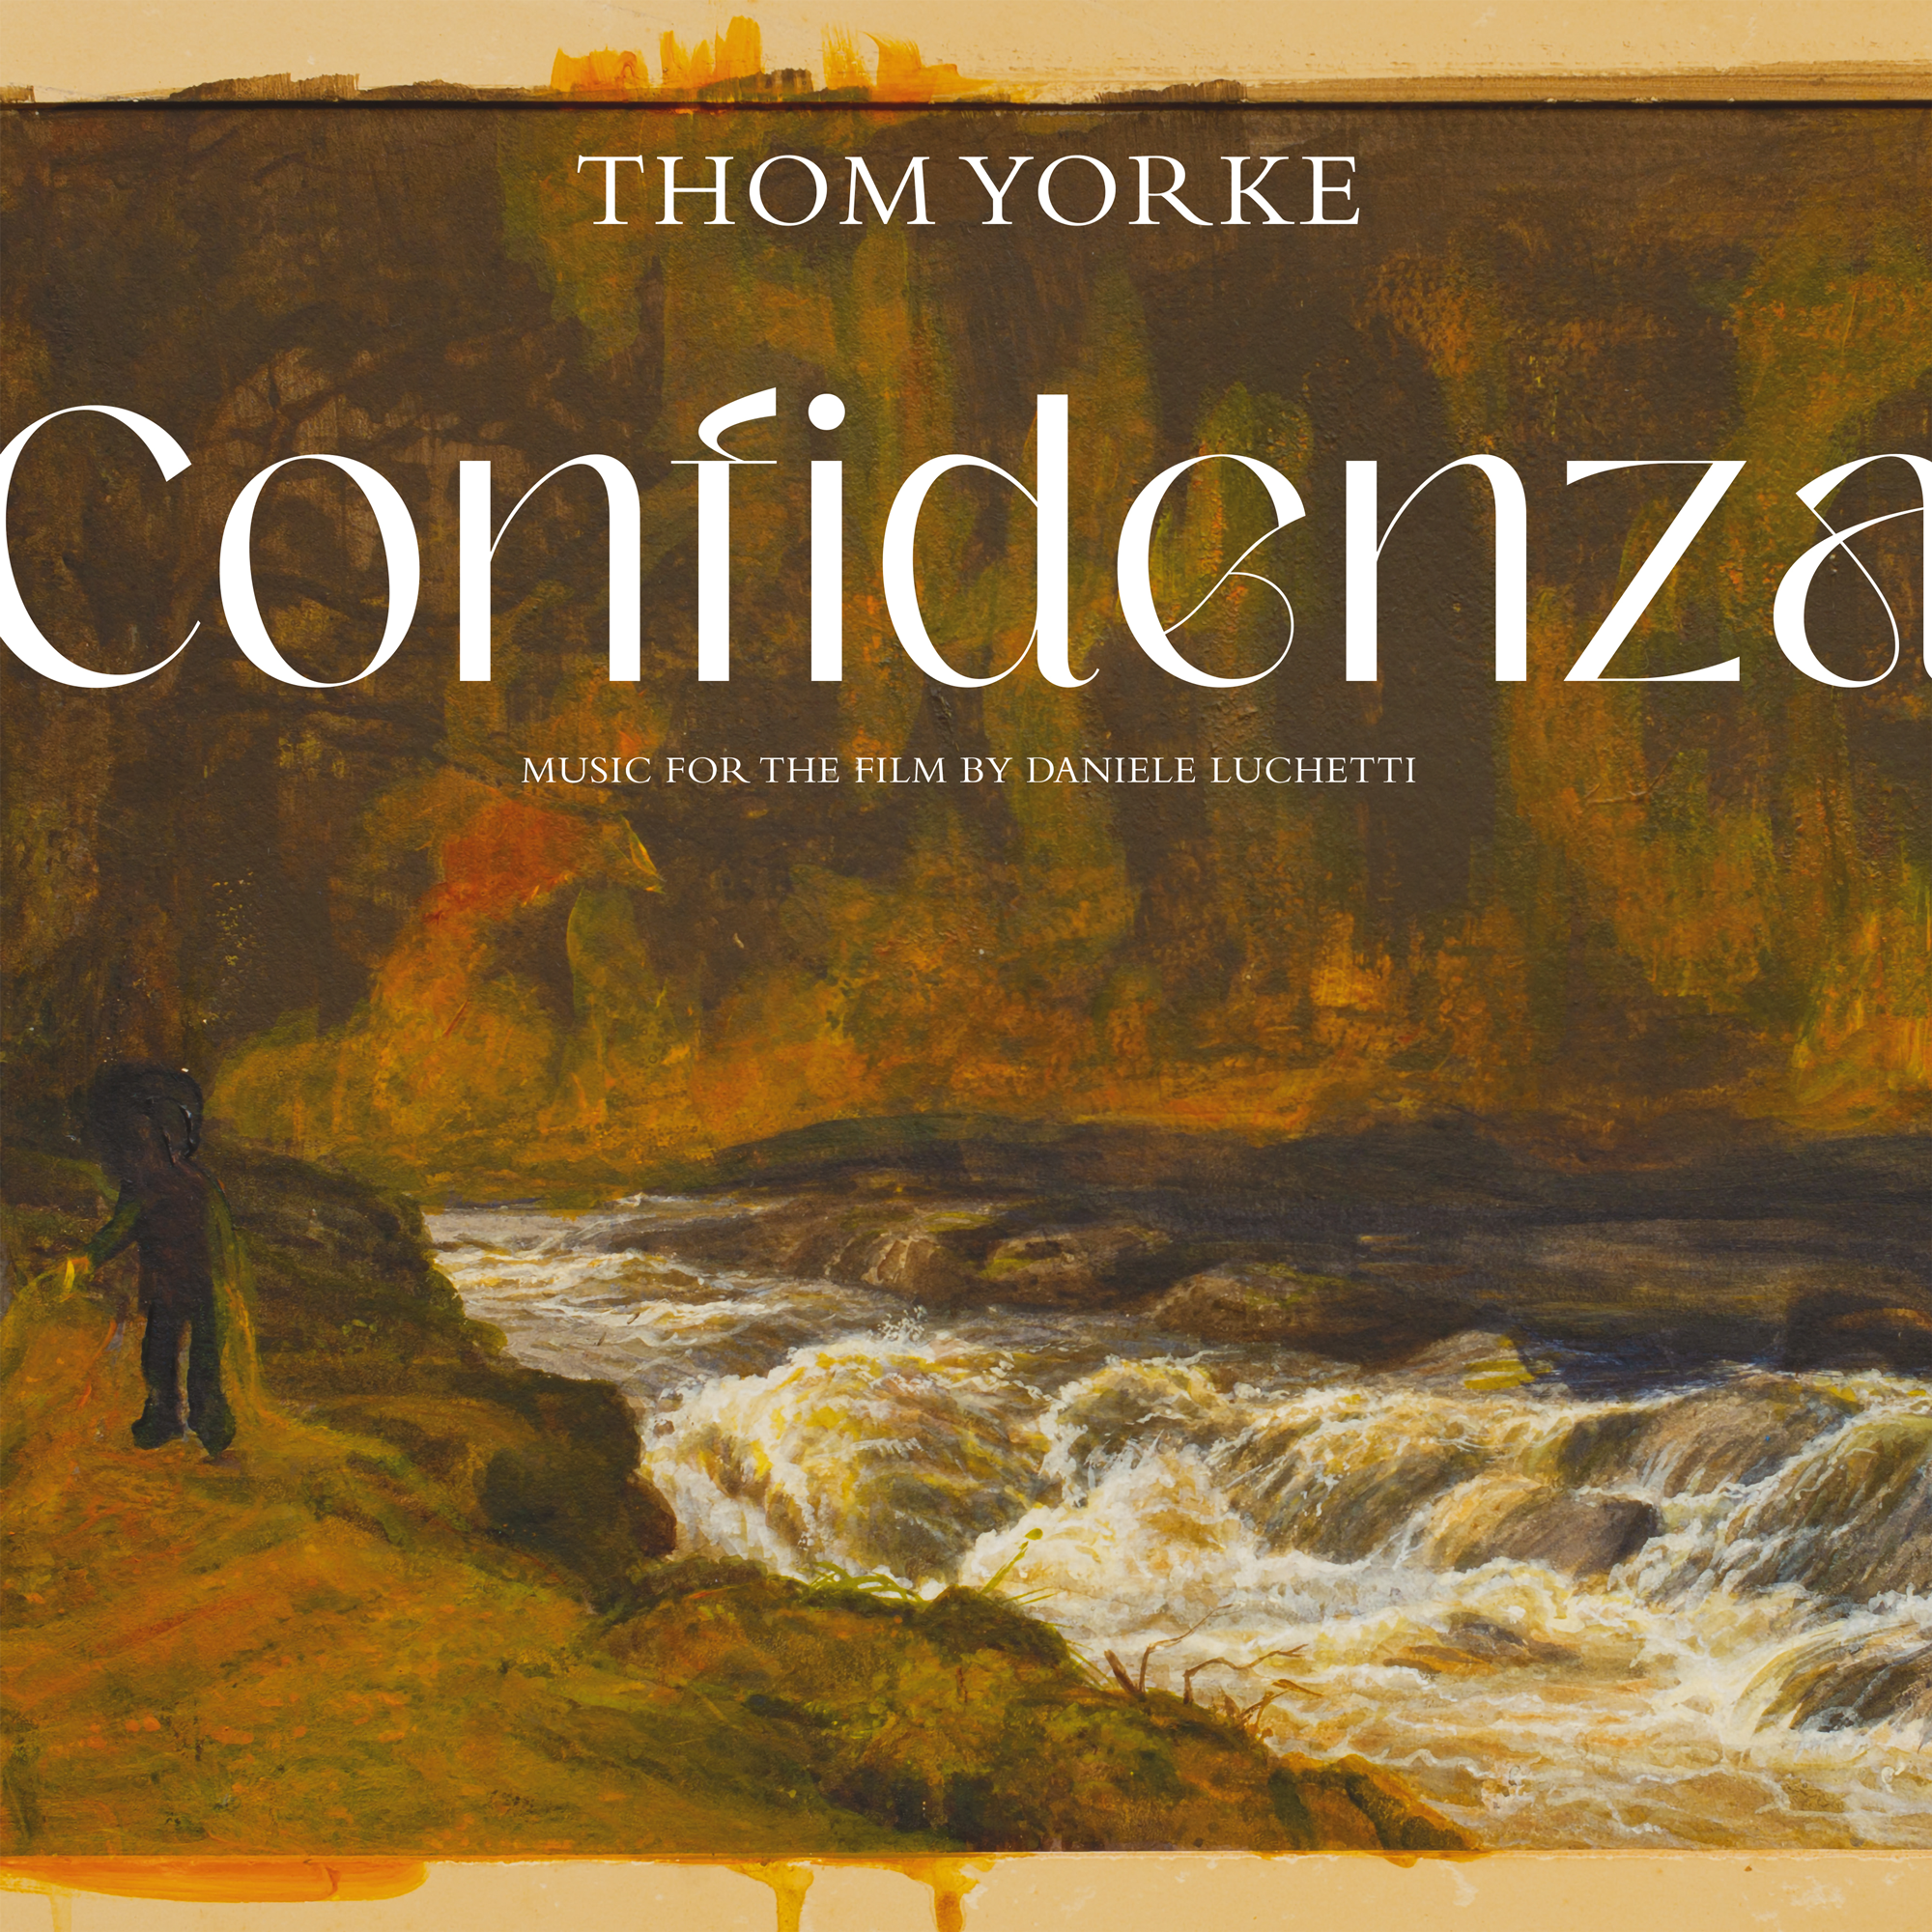 Thom Yorke - Confidenza (OST): CD